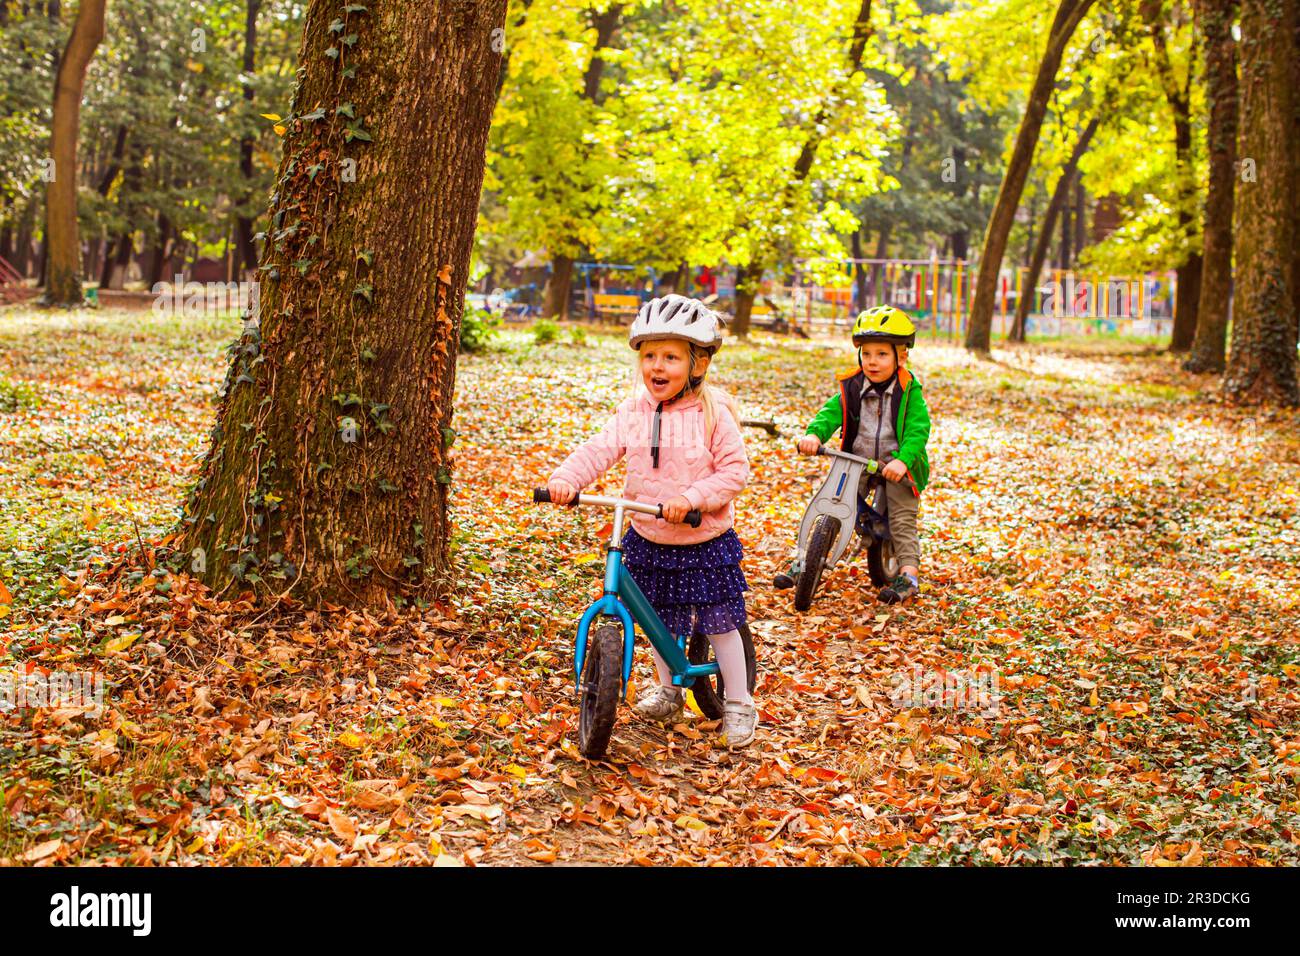 Cheerful preschool kids outdoors on balance bikes Stock Photo